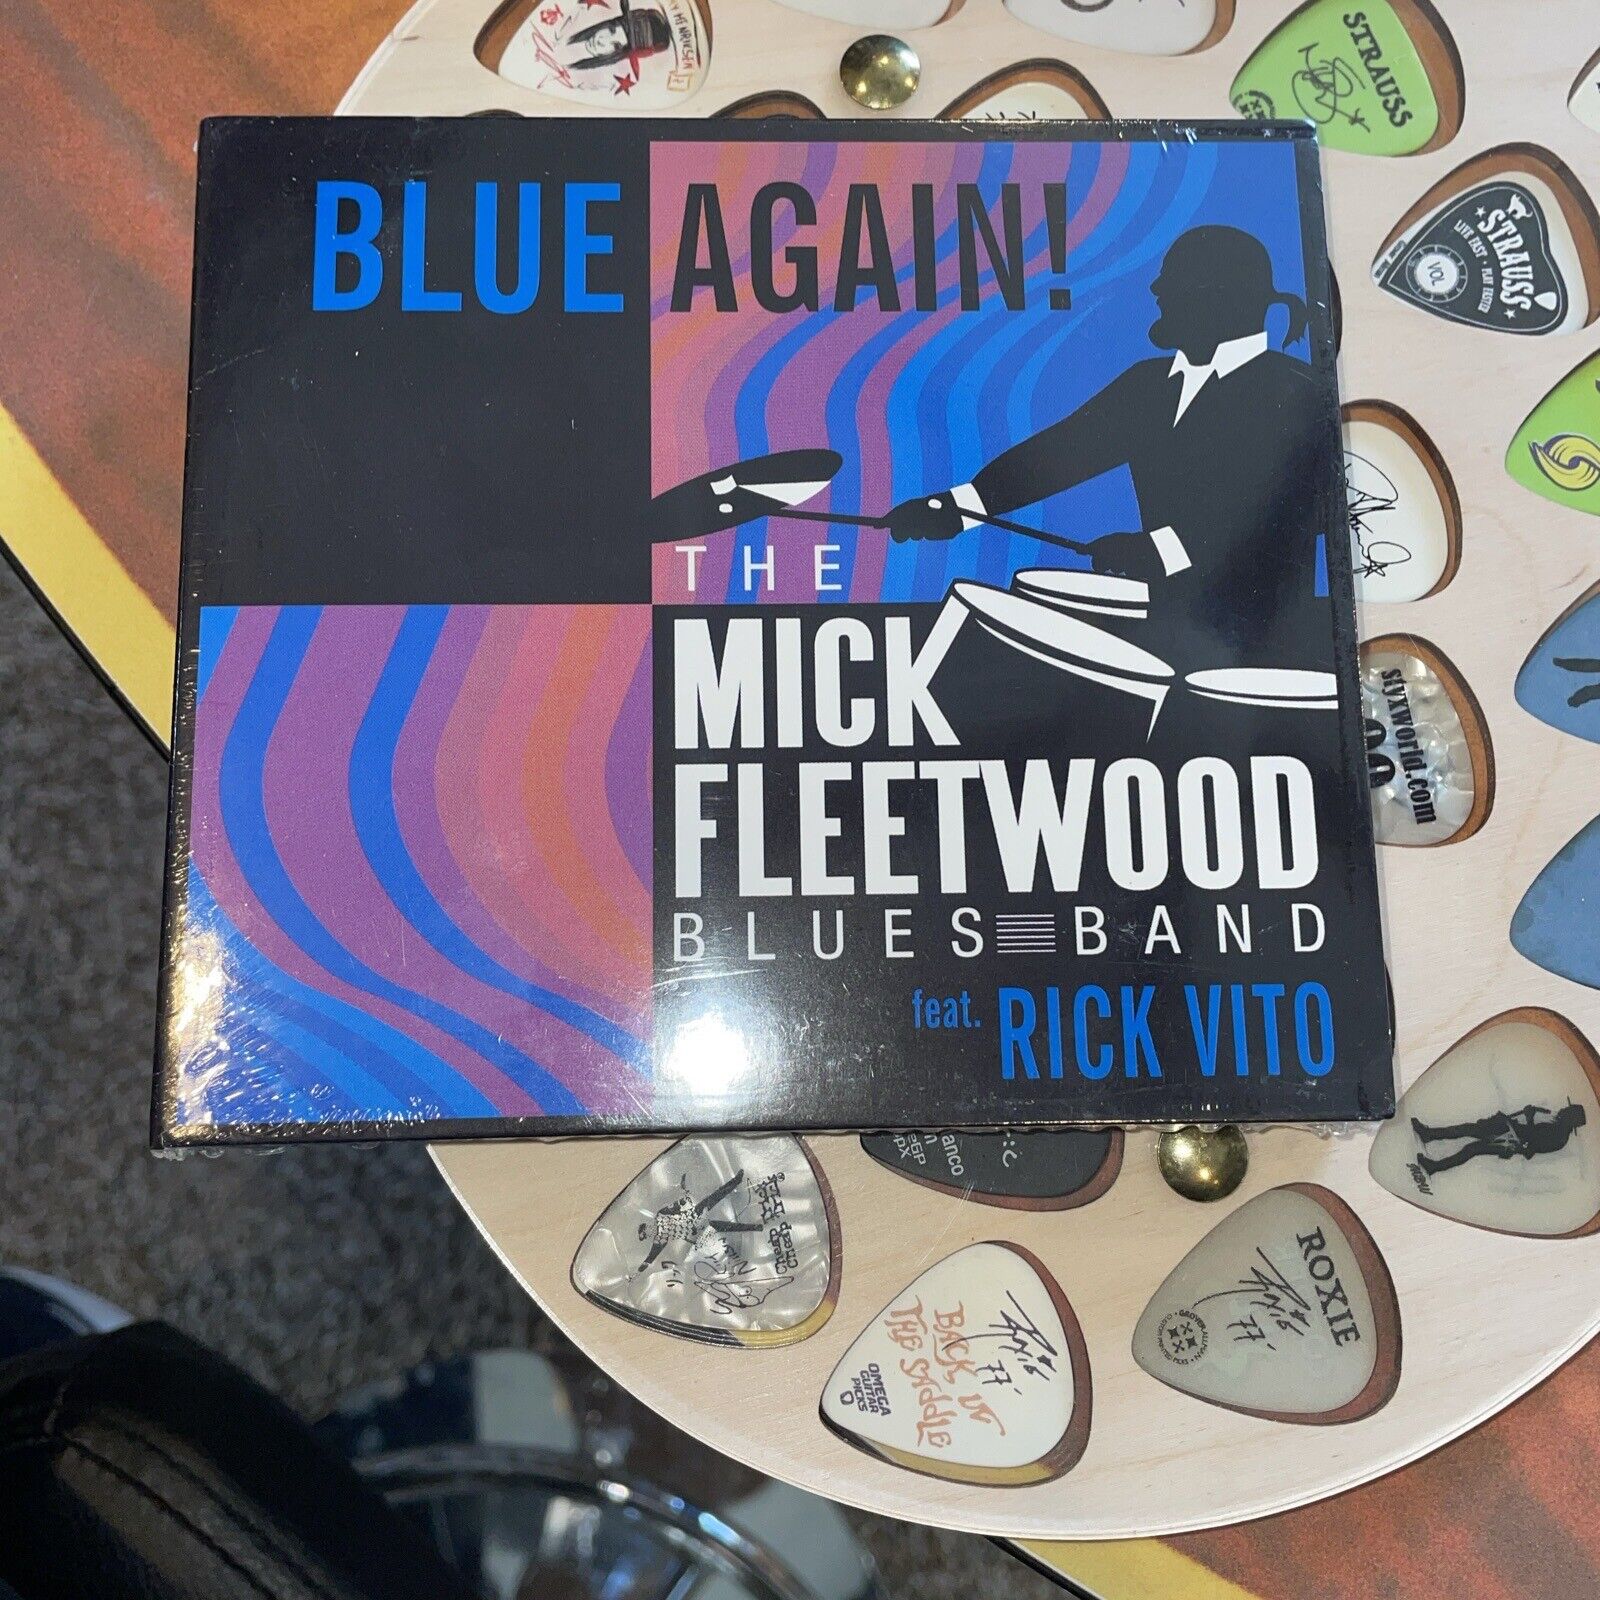 Mick fleetwood Blues band NEW SEALED CD Blue Again